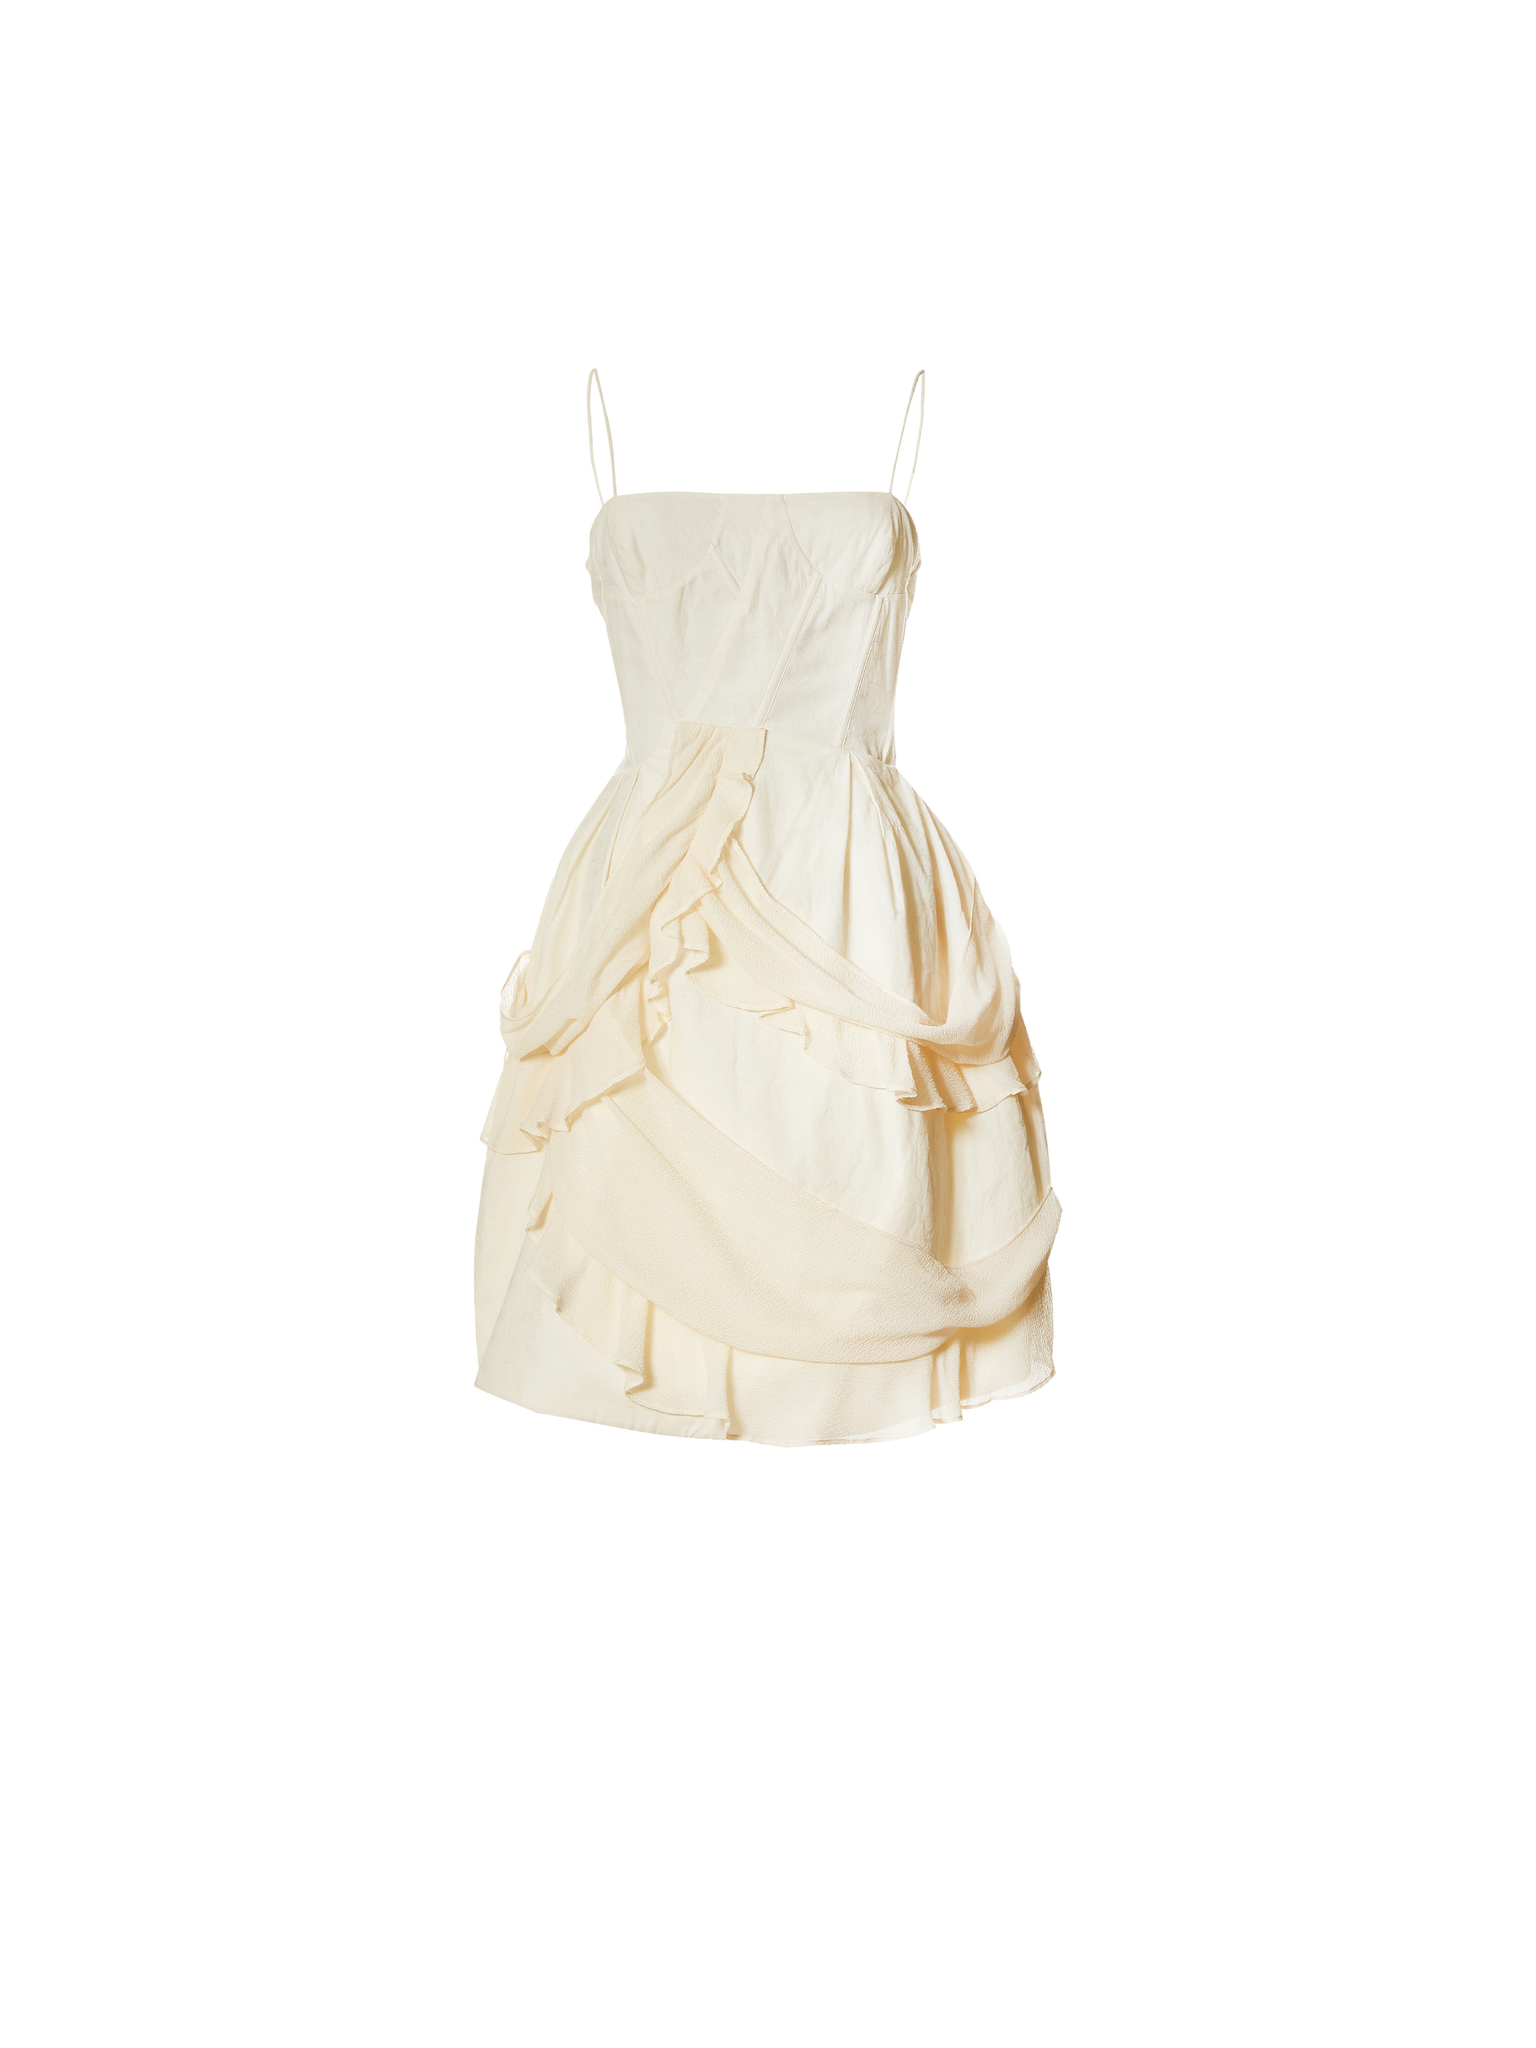 White Silhouette Dress